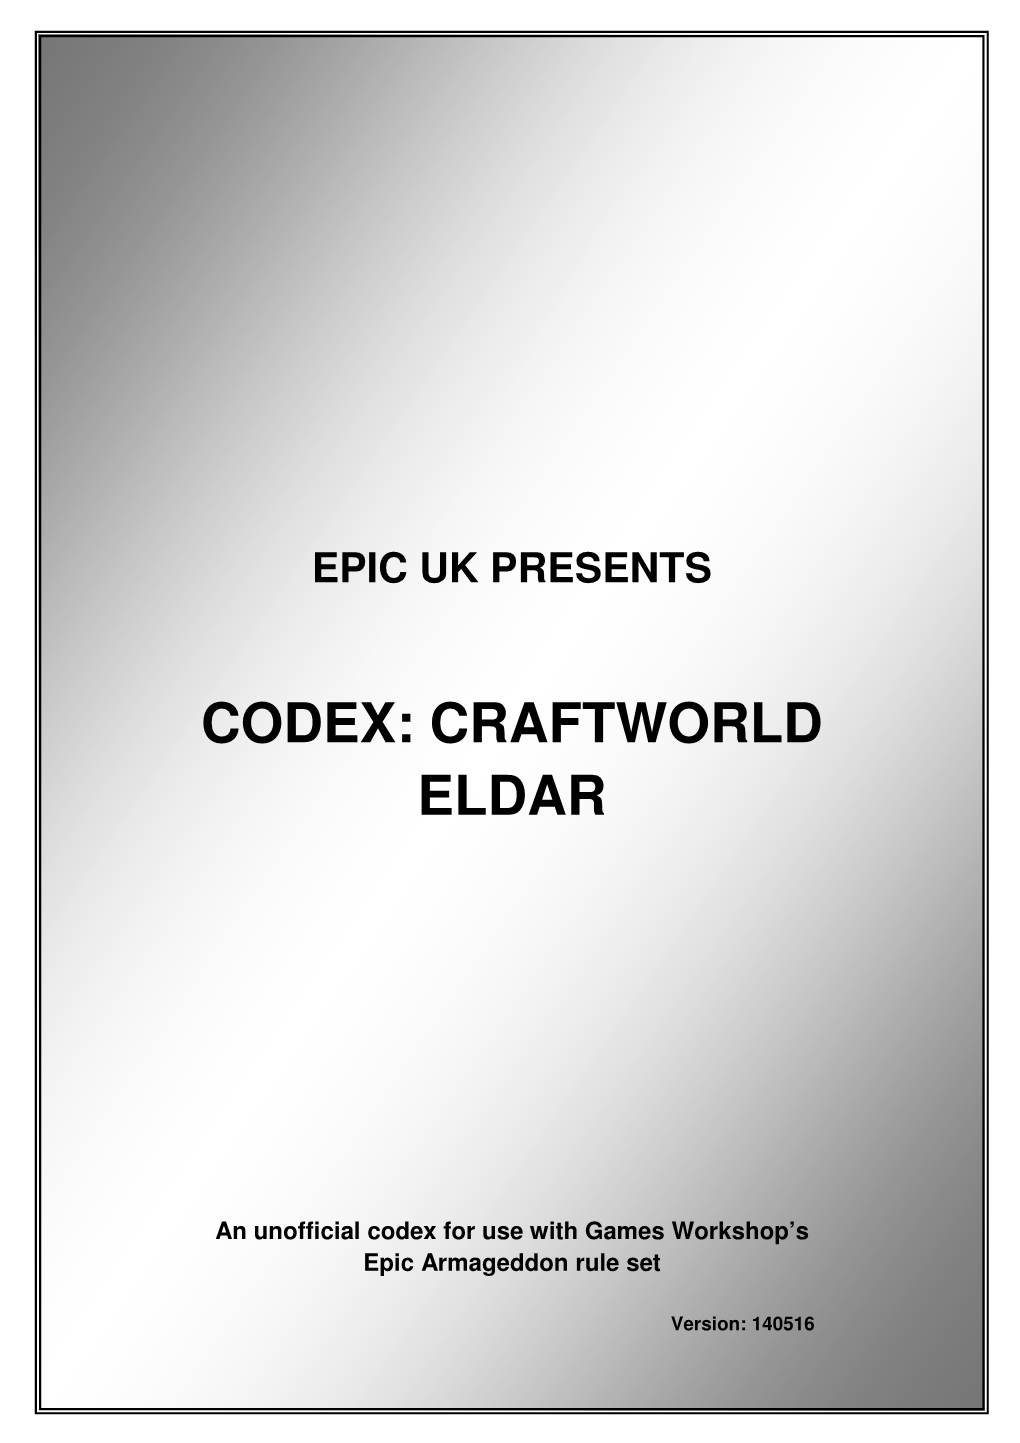 Codex: Craftworld Eldar